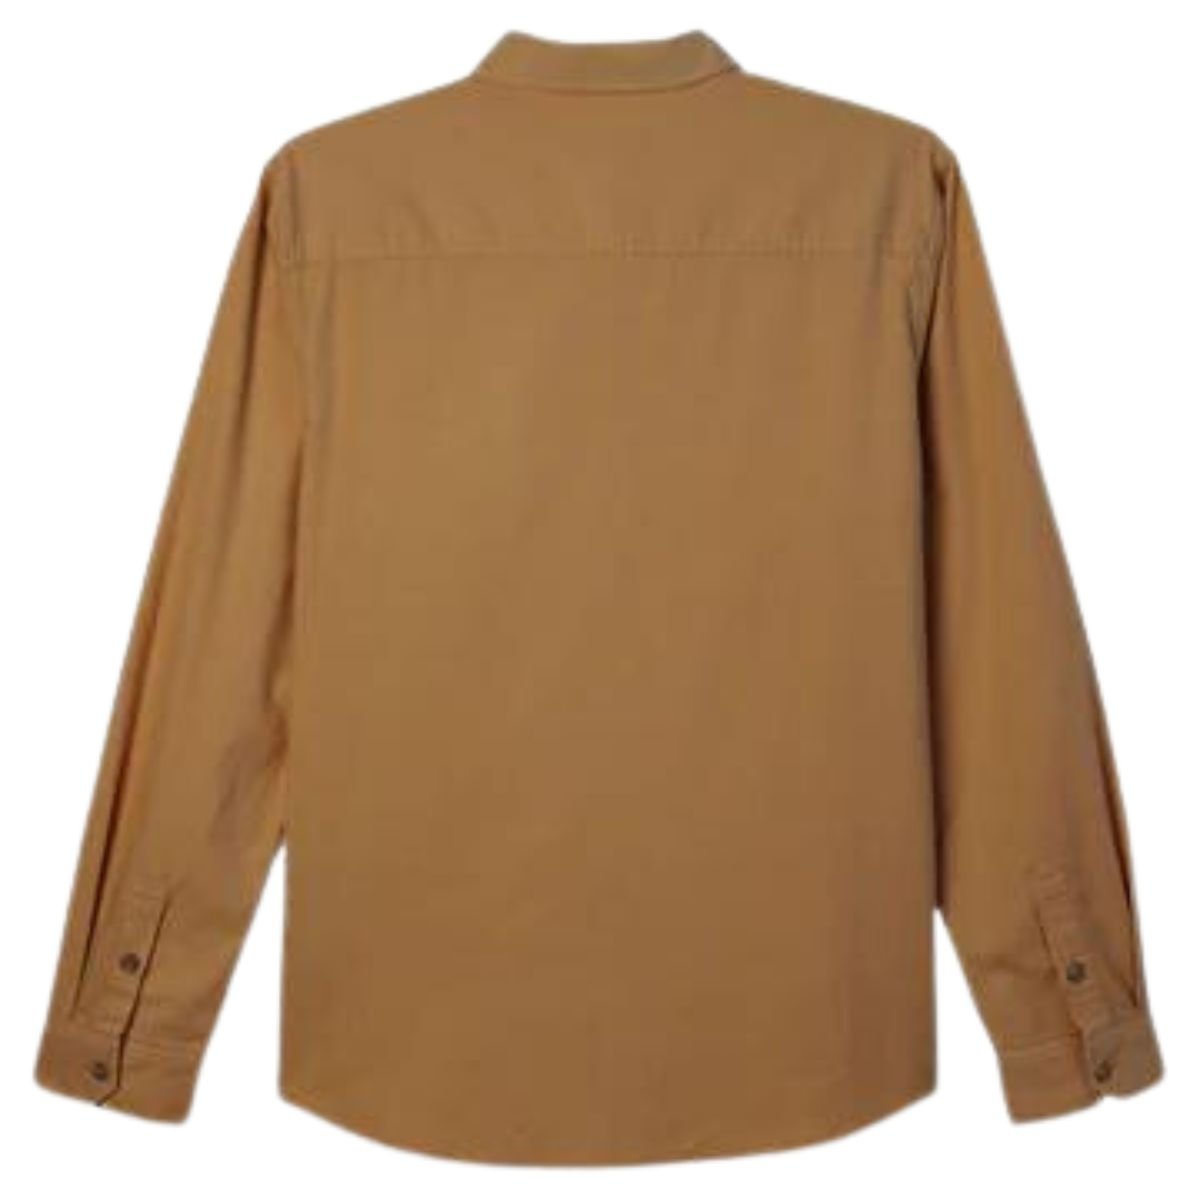 O'Neill Caruso Solid Long Sleeve Shirt in Dark Khaki - BoardCo